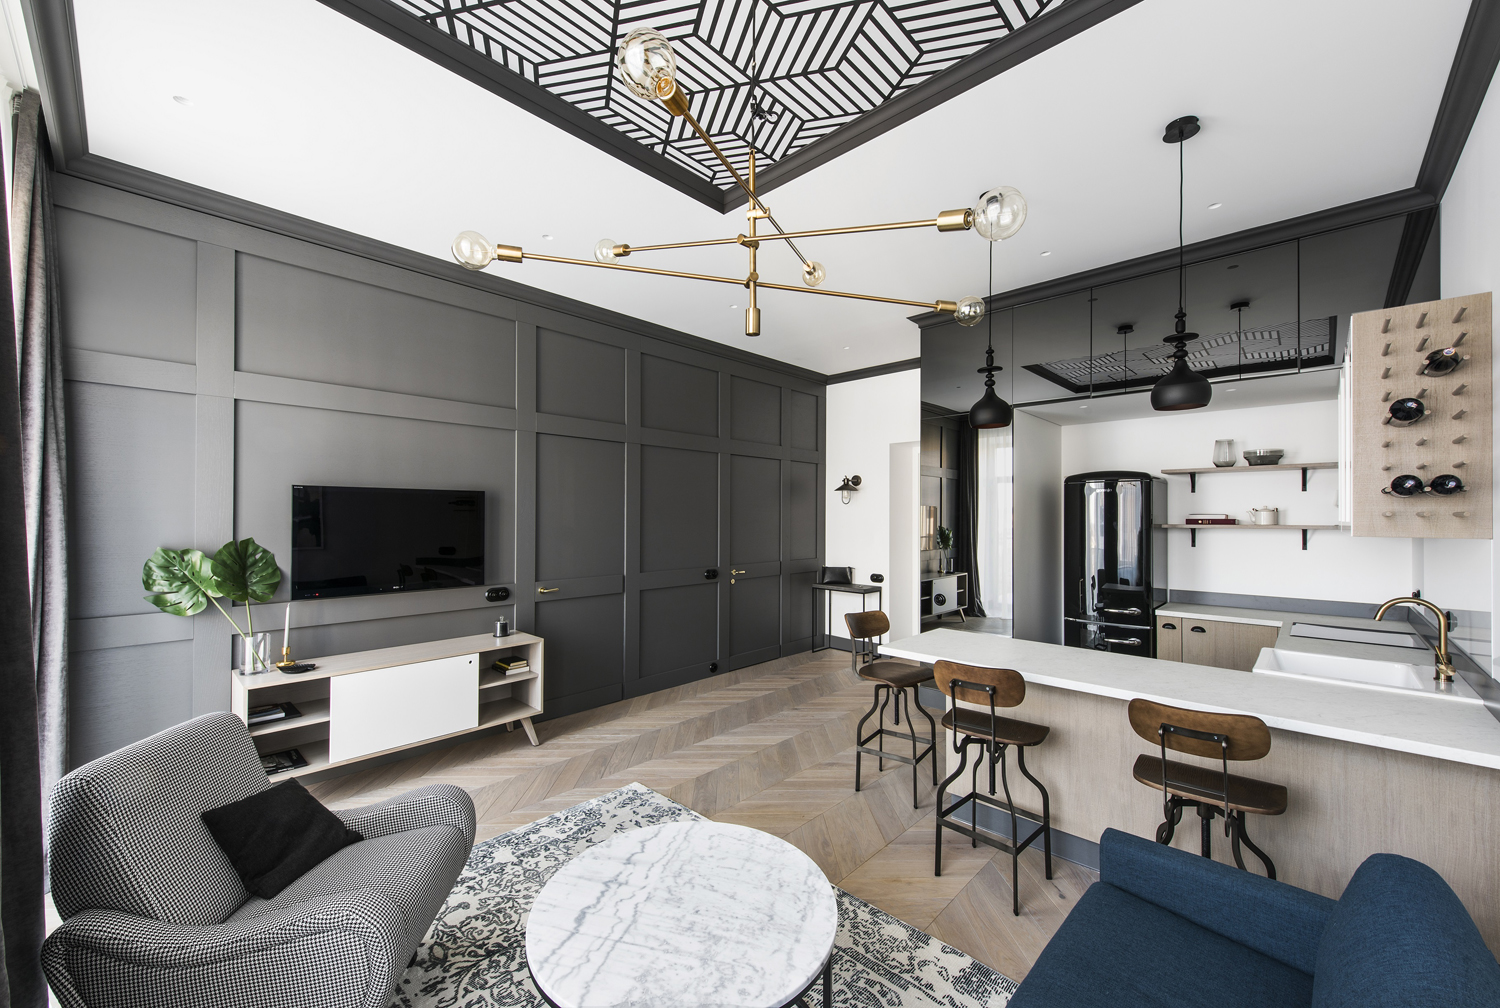 Stylish Apartment Decor' by stylev